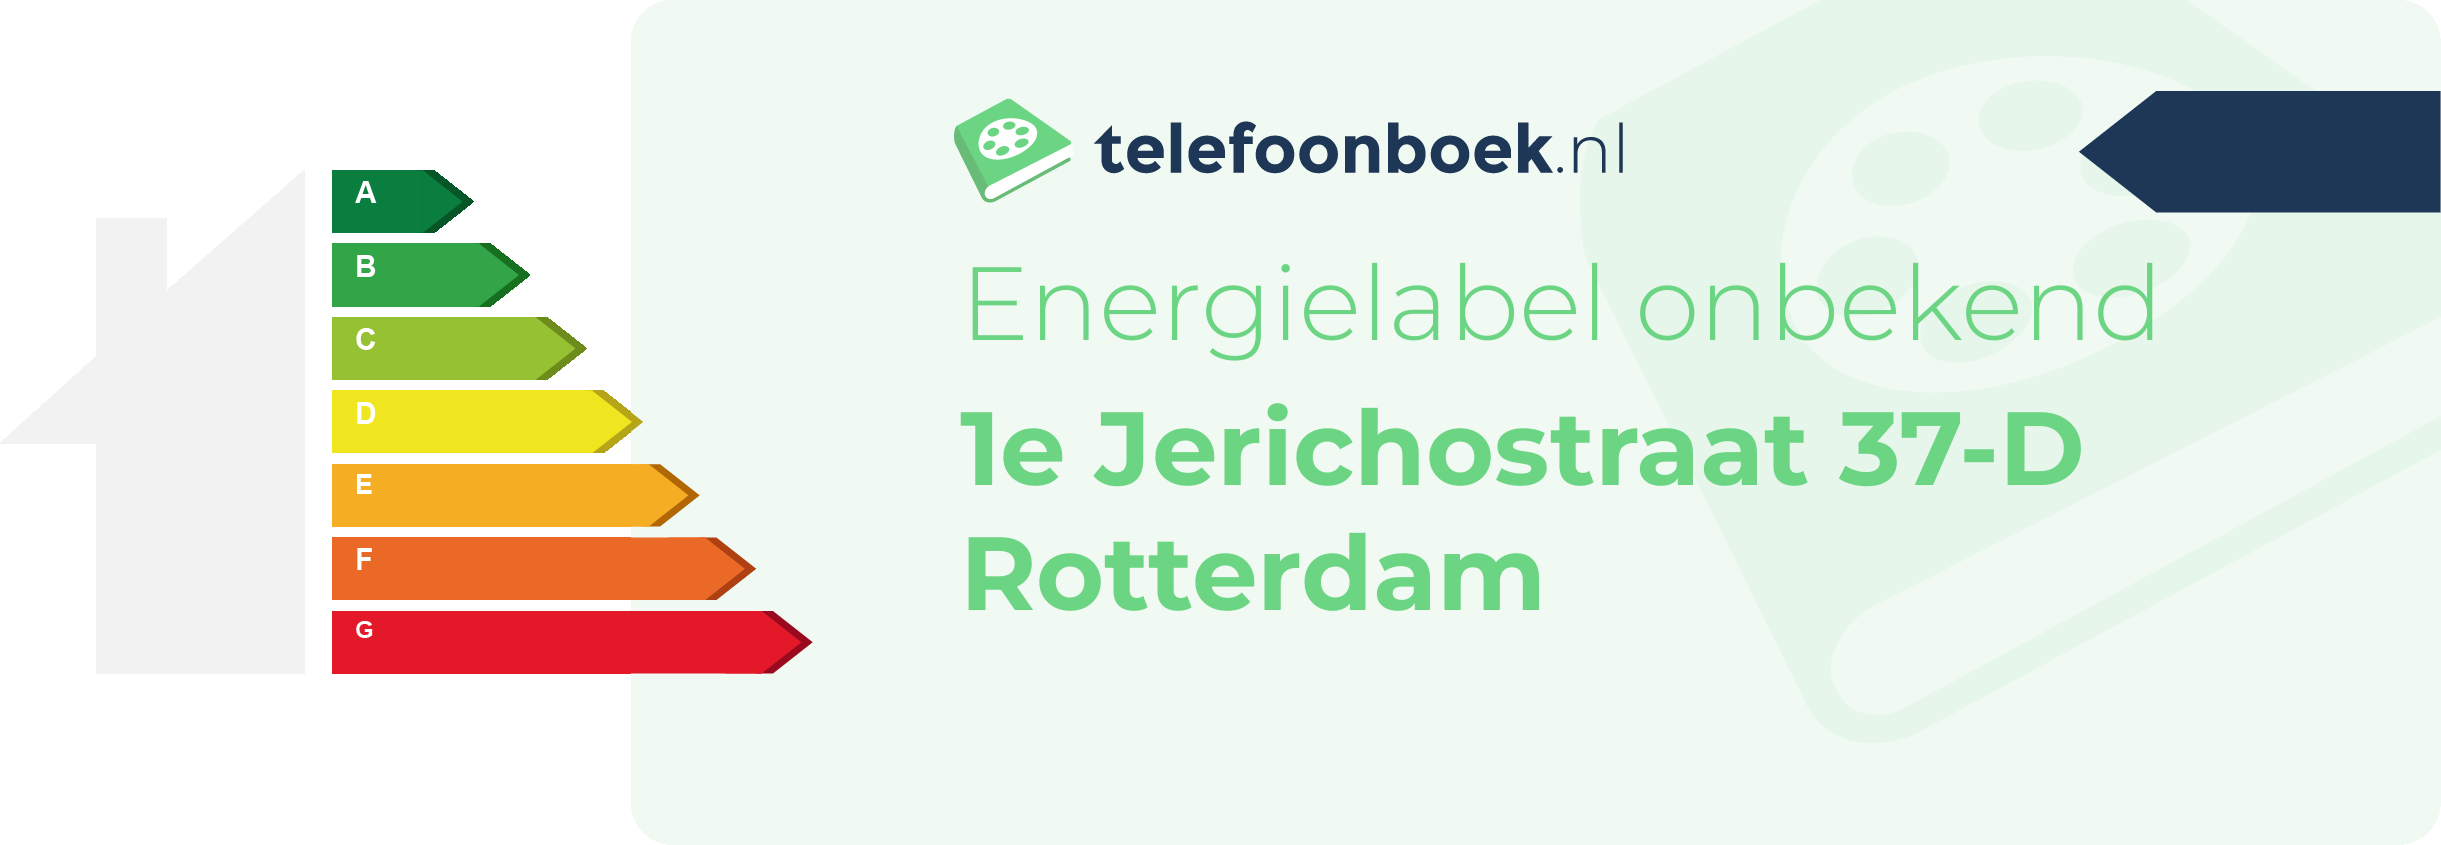 Energielabel 1e Jerichostraat 37-D Rotterdam